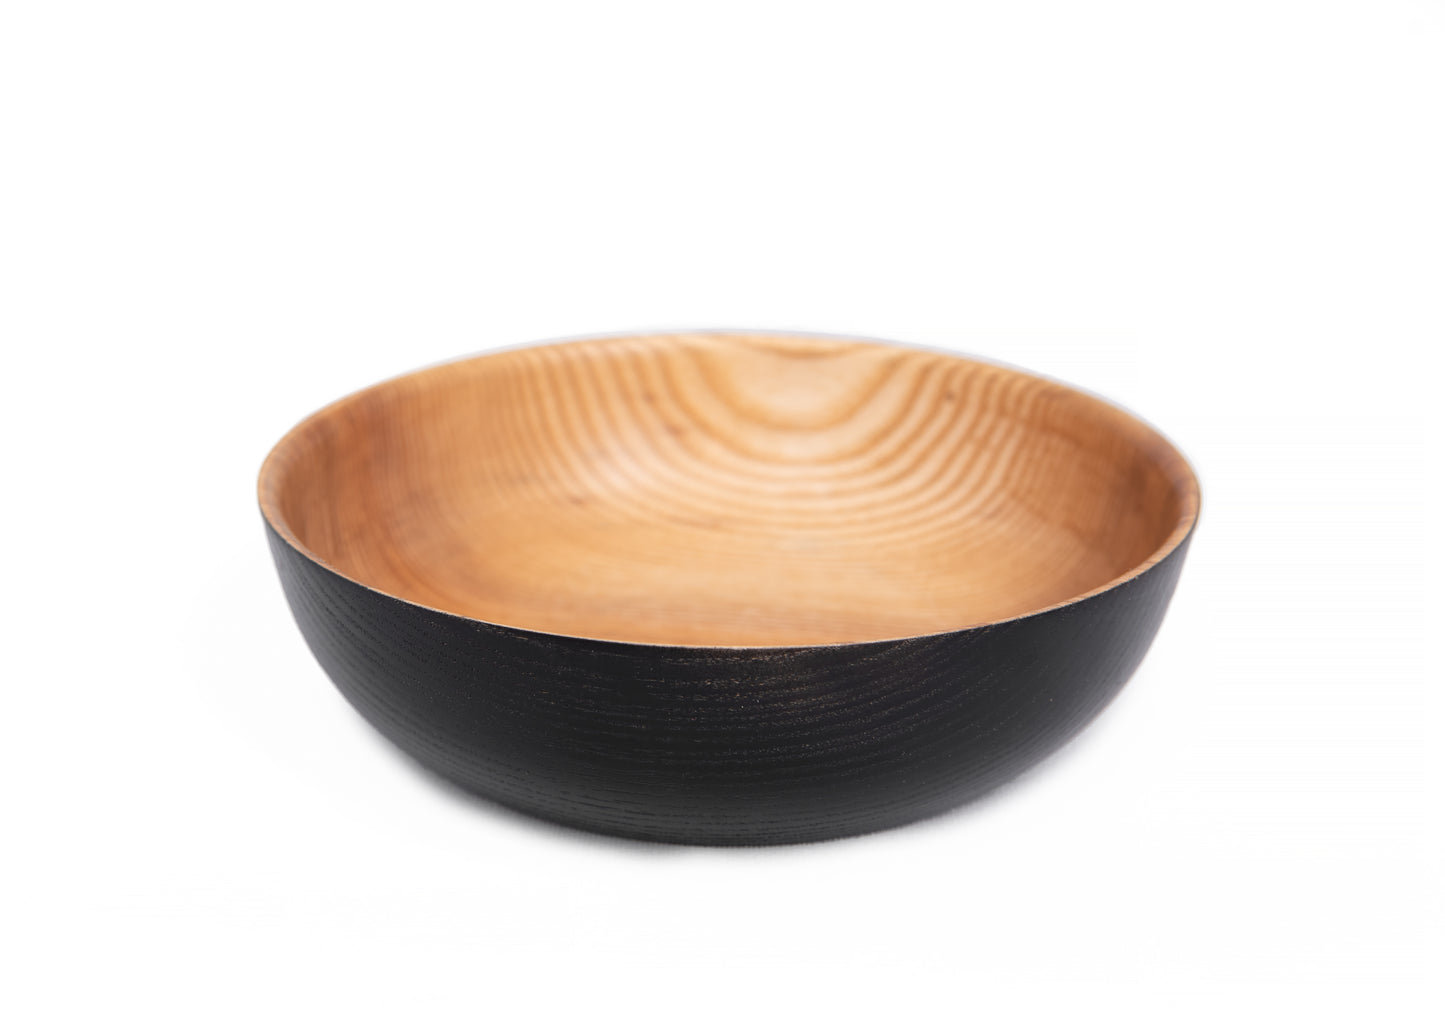 Ebonized ash bowl